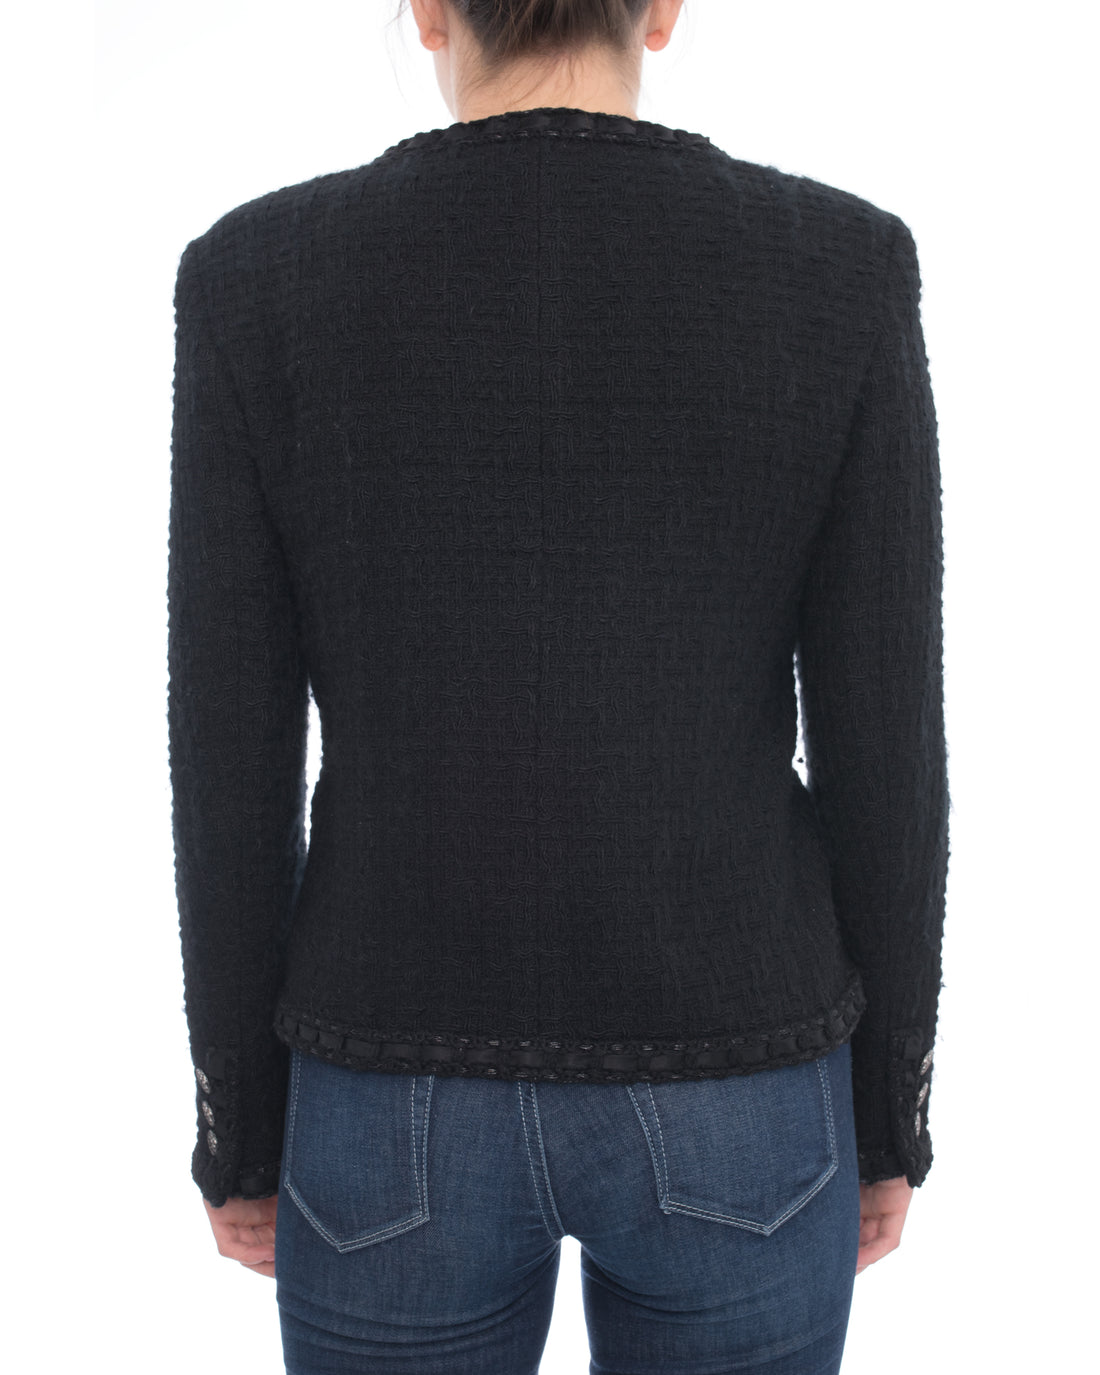 Chanel 2016 Classic Black Tweed Jacket - FR 42 (USA 10) – I MISS YOU VINTAGE